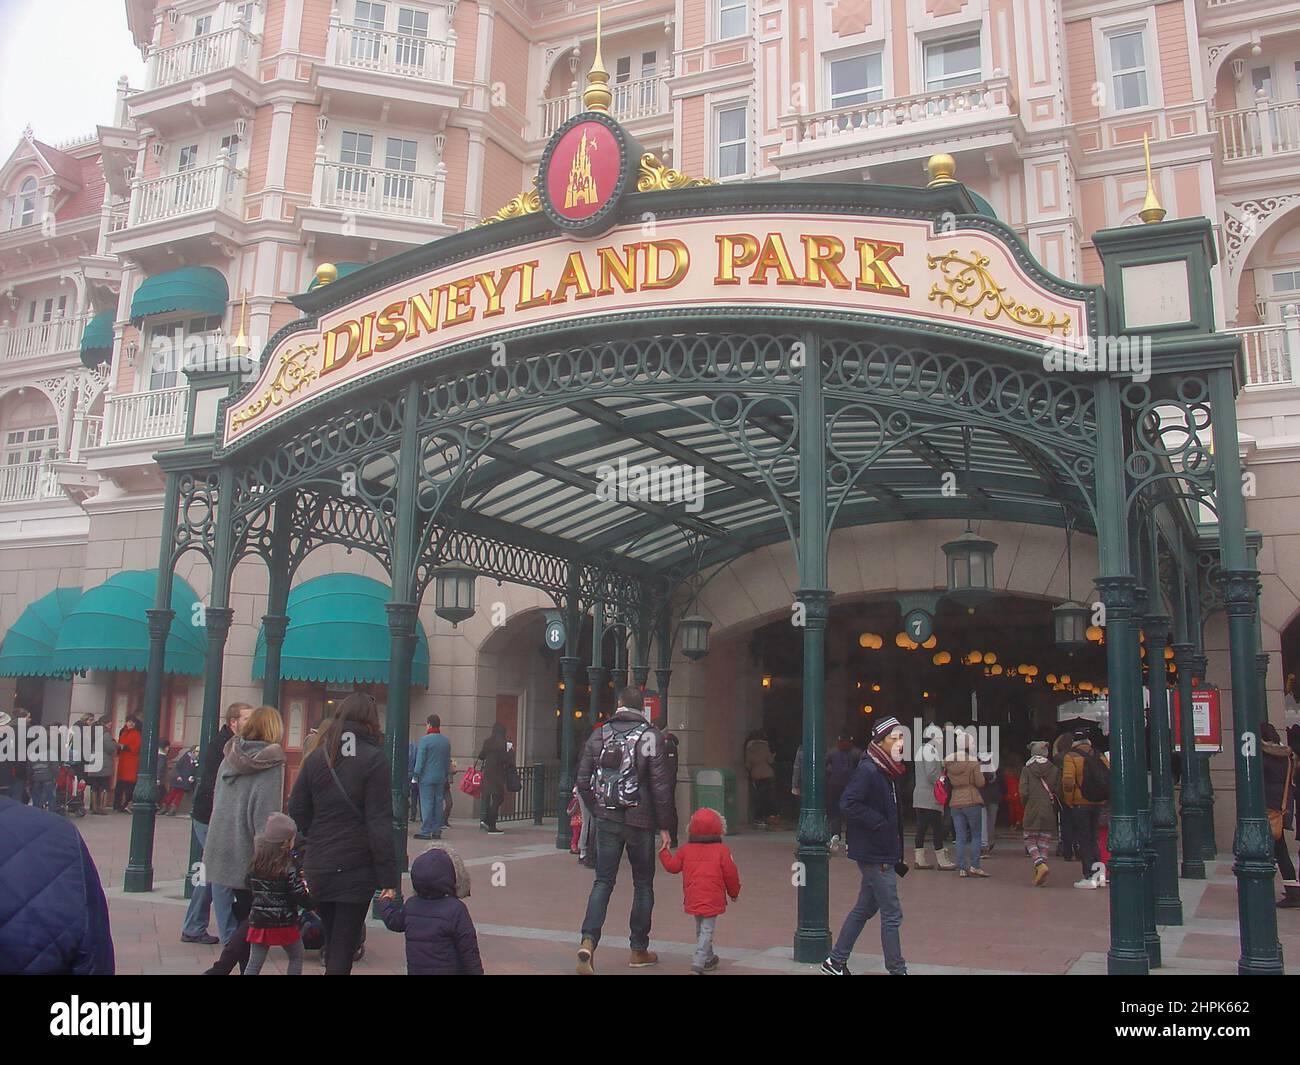 Disneyland Park, Paris entrance for Disney world in 2015 Stock Photo